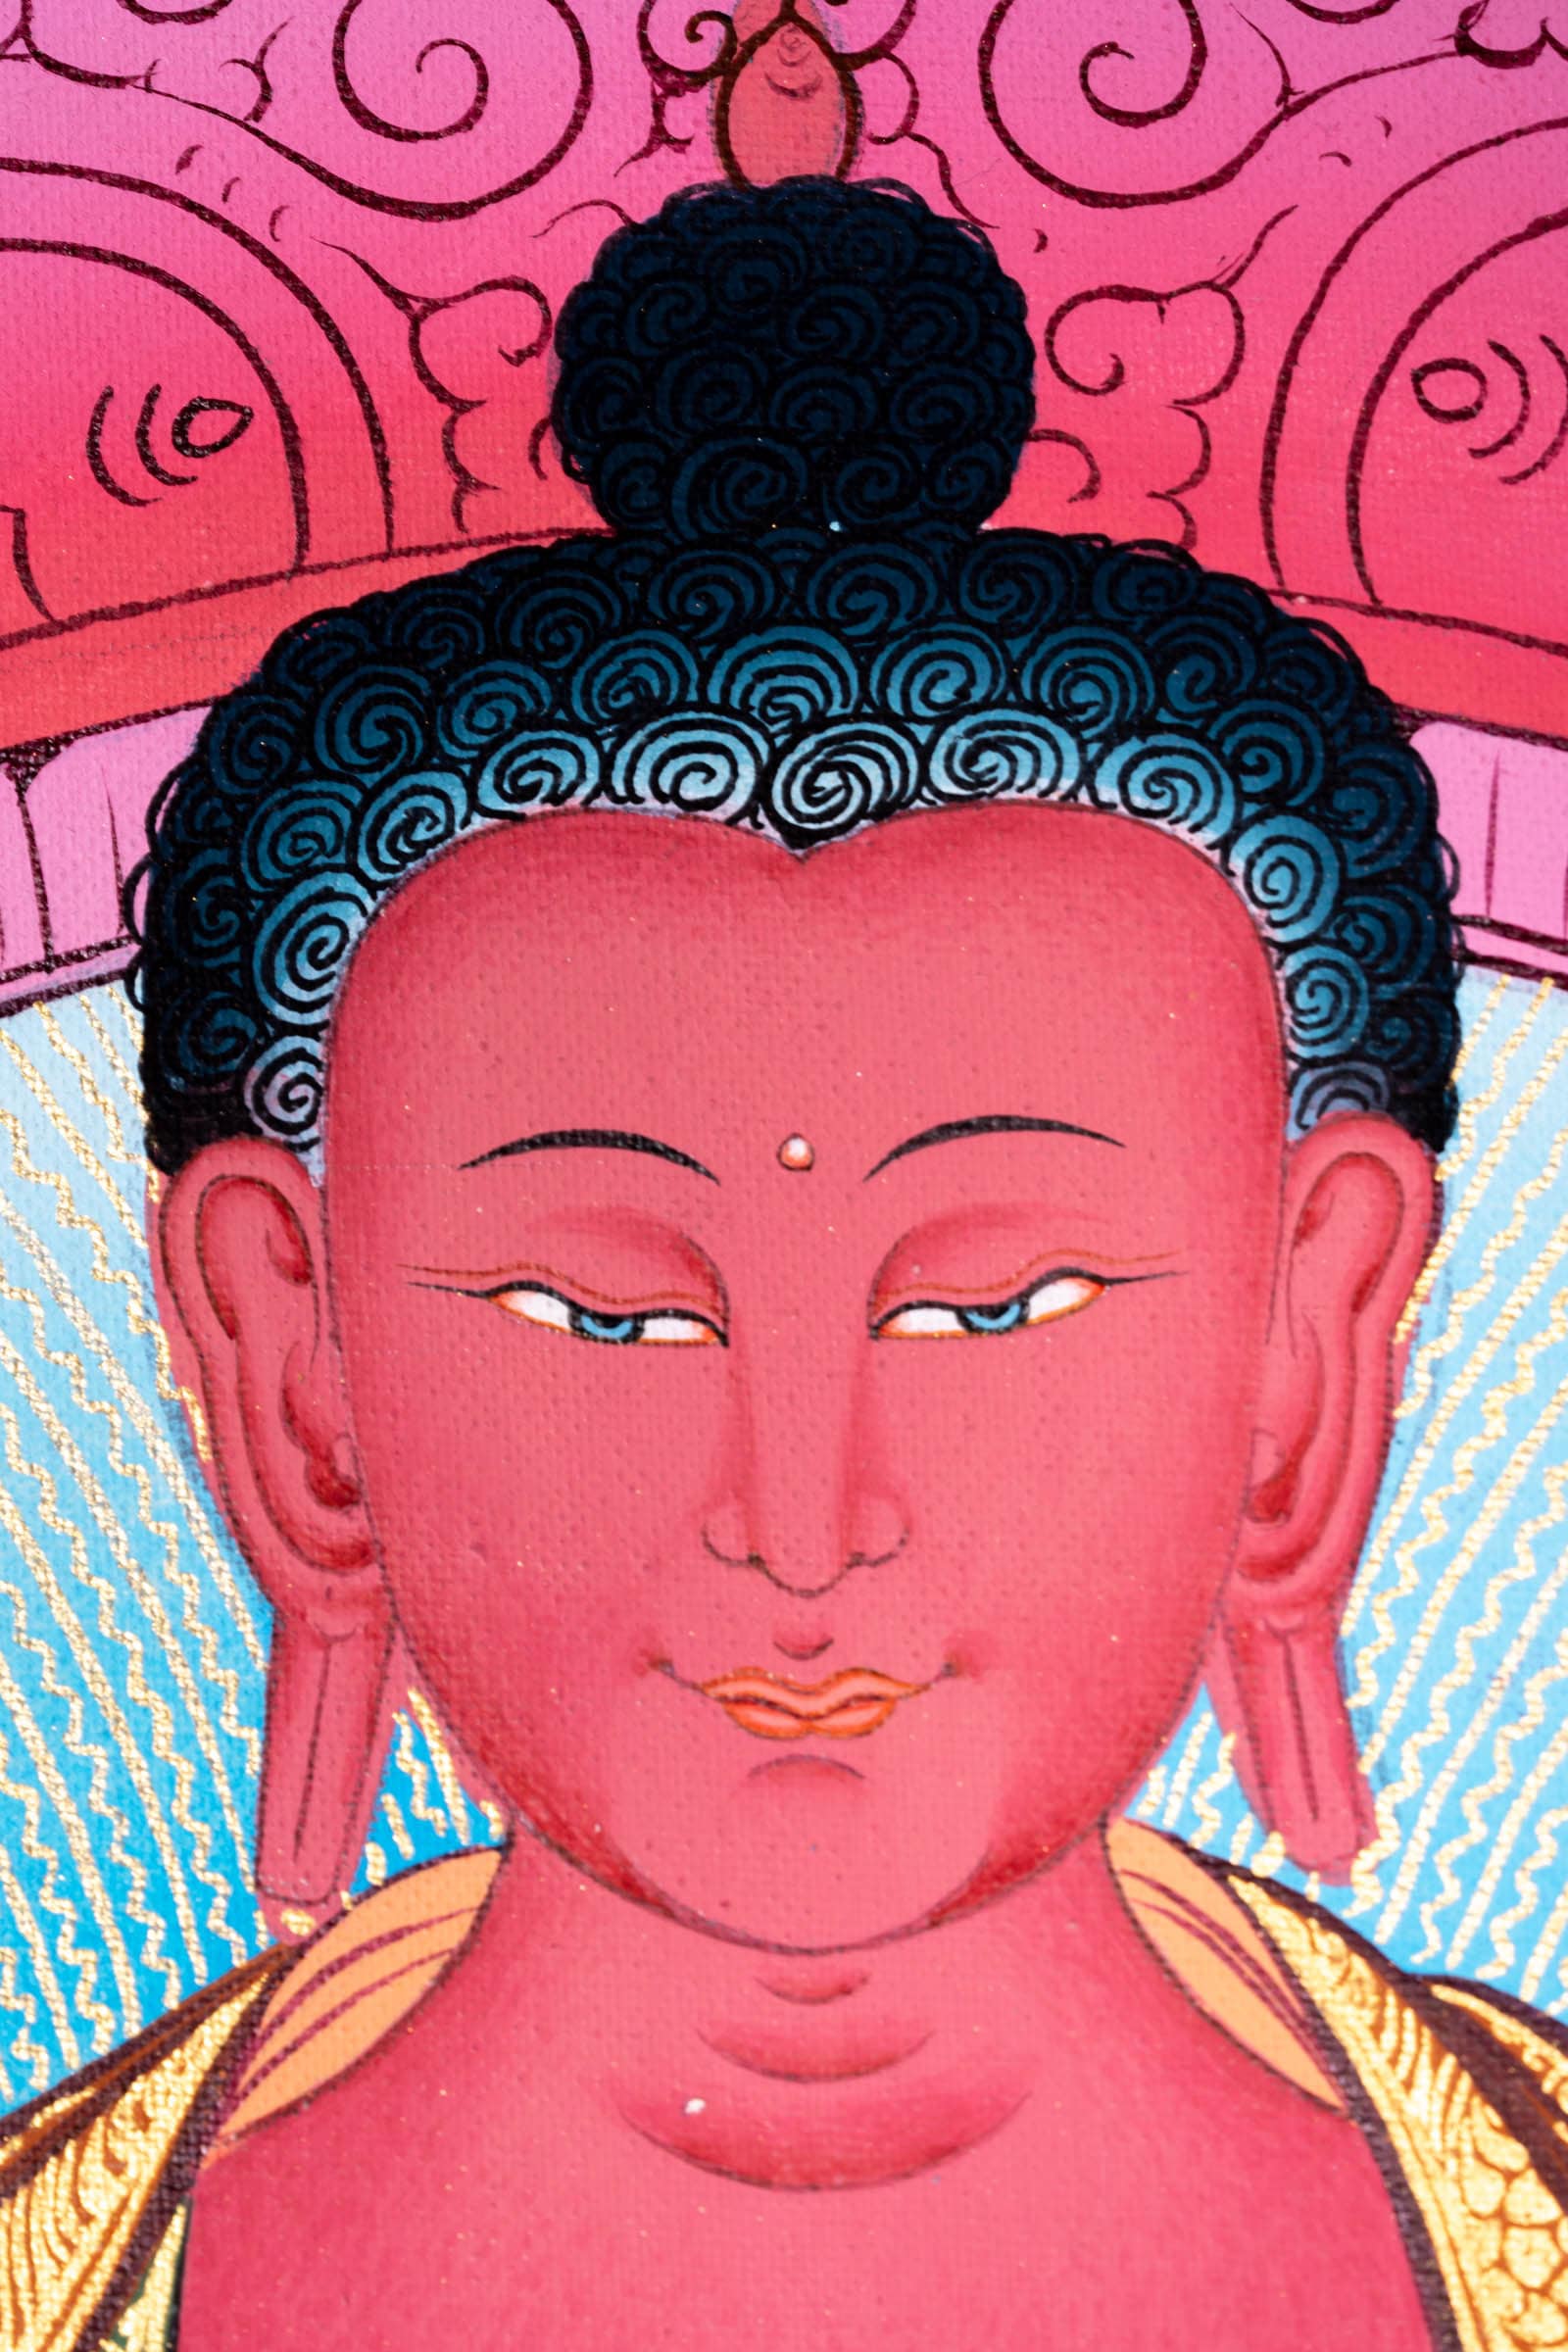 Amitabha Buddha Thangka Painting - Lucky Thanka